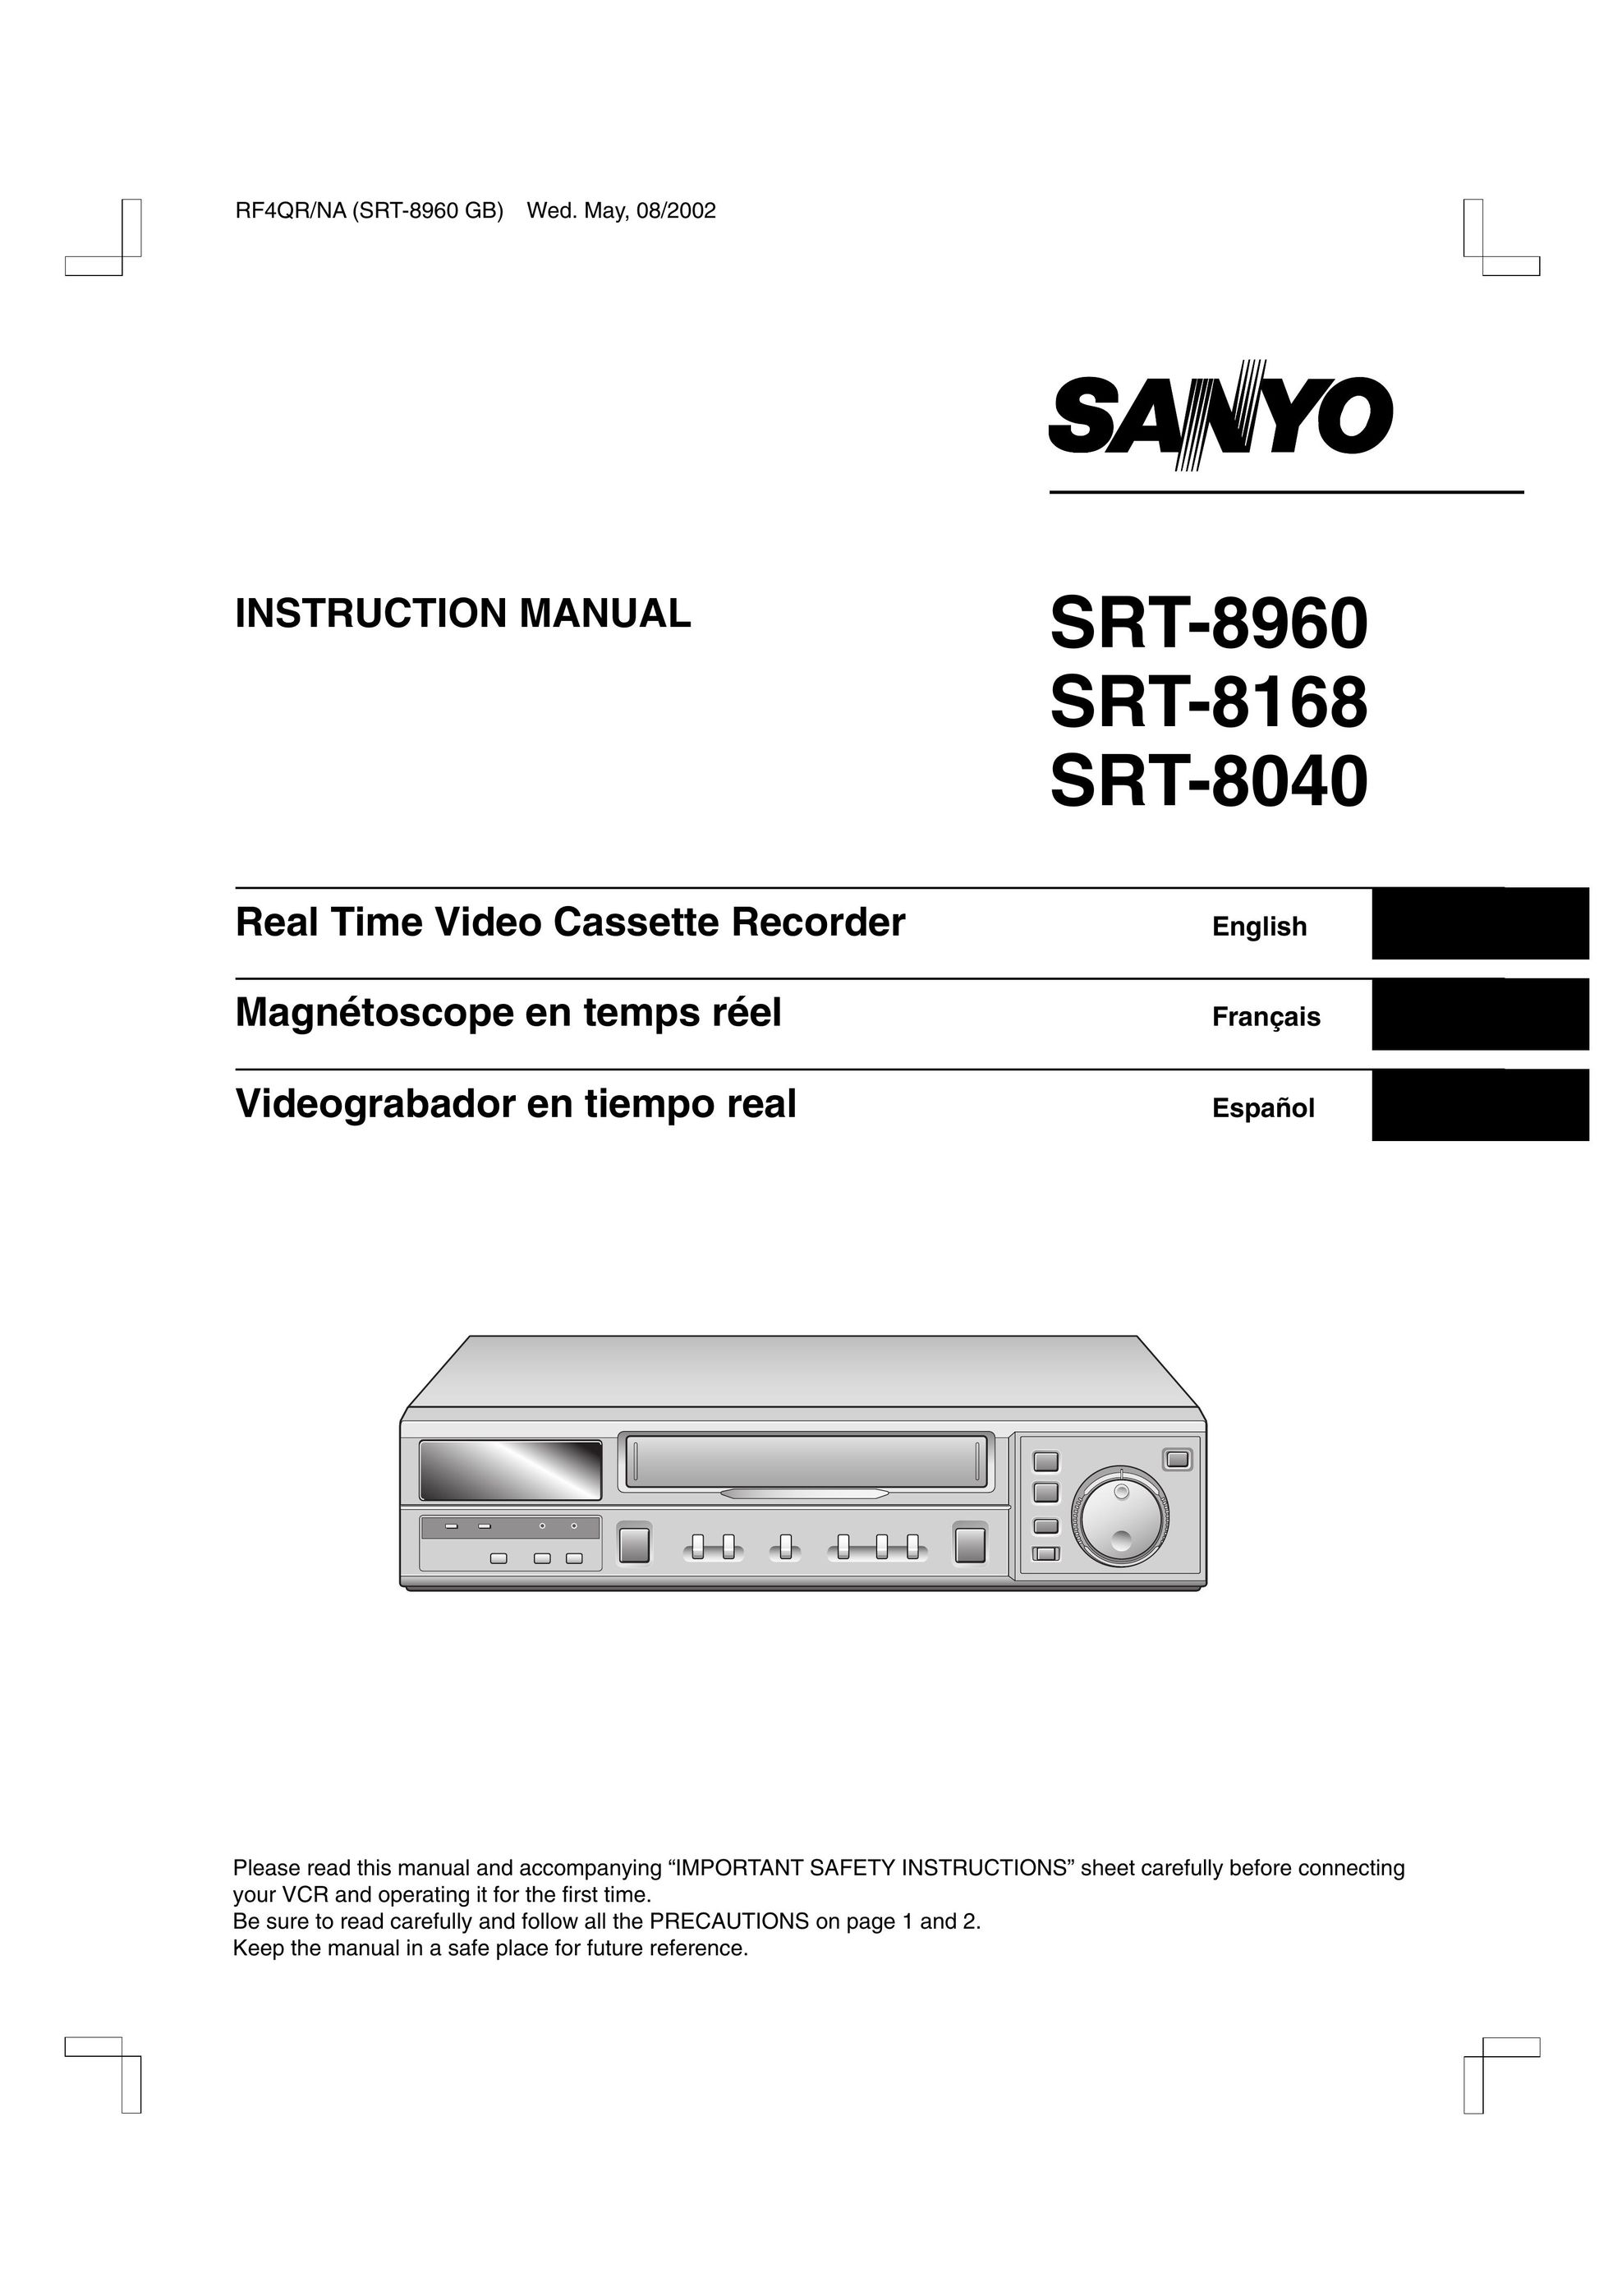 Sharp SRT-8040 VCR User Manual